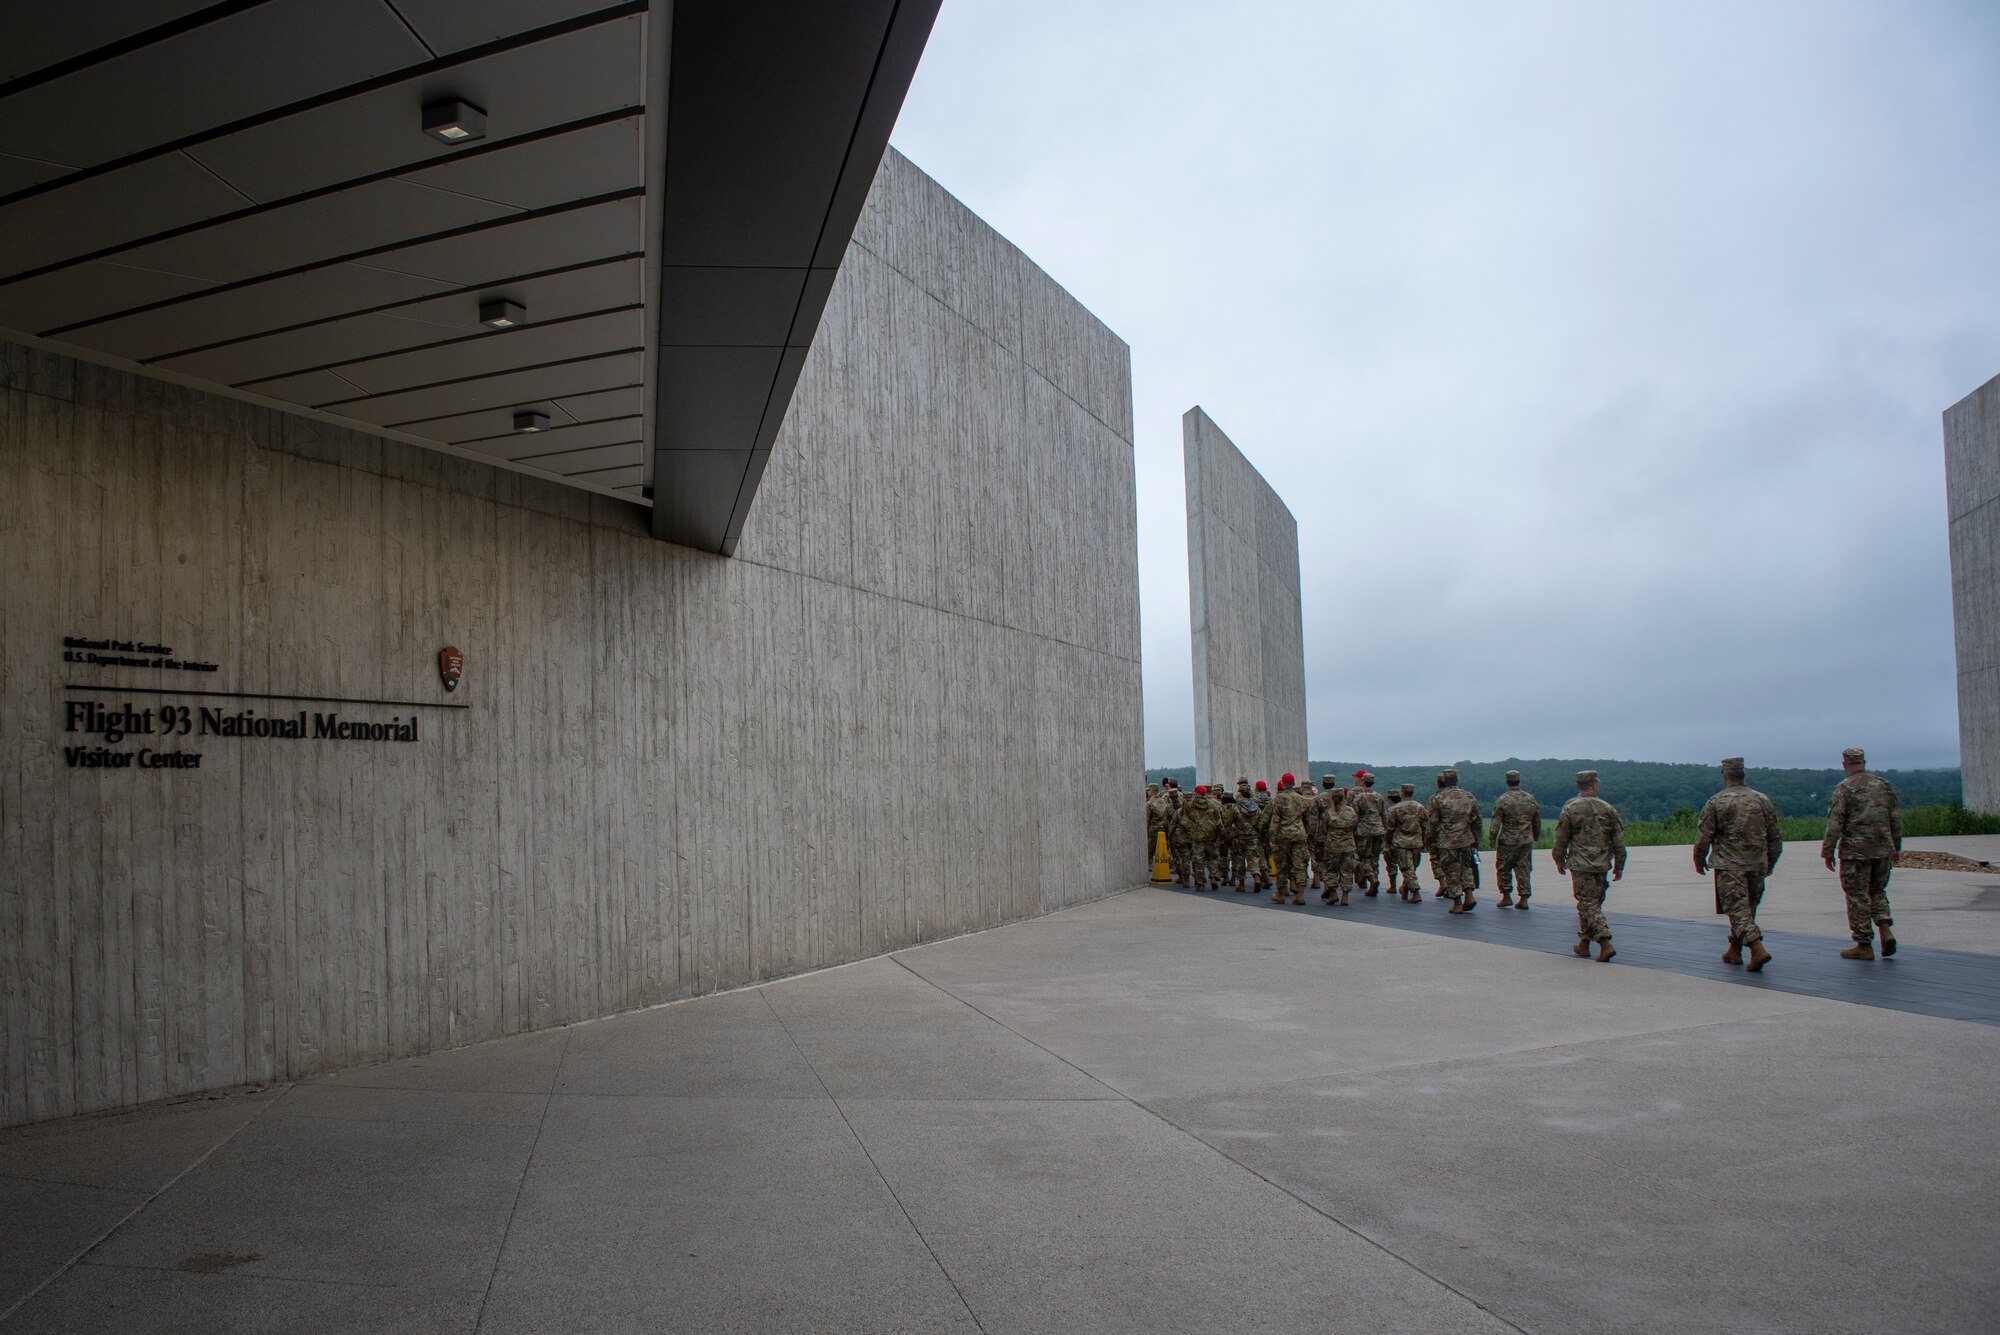 Servicemembers enter the Flight 93 memorial.